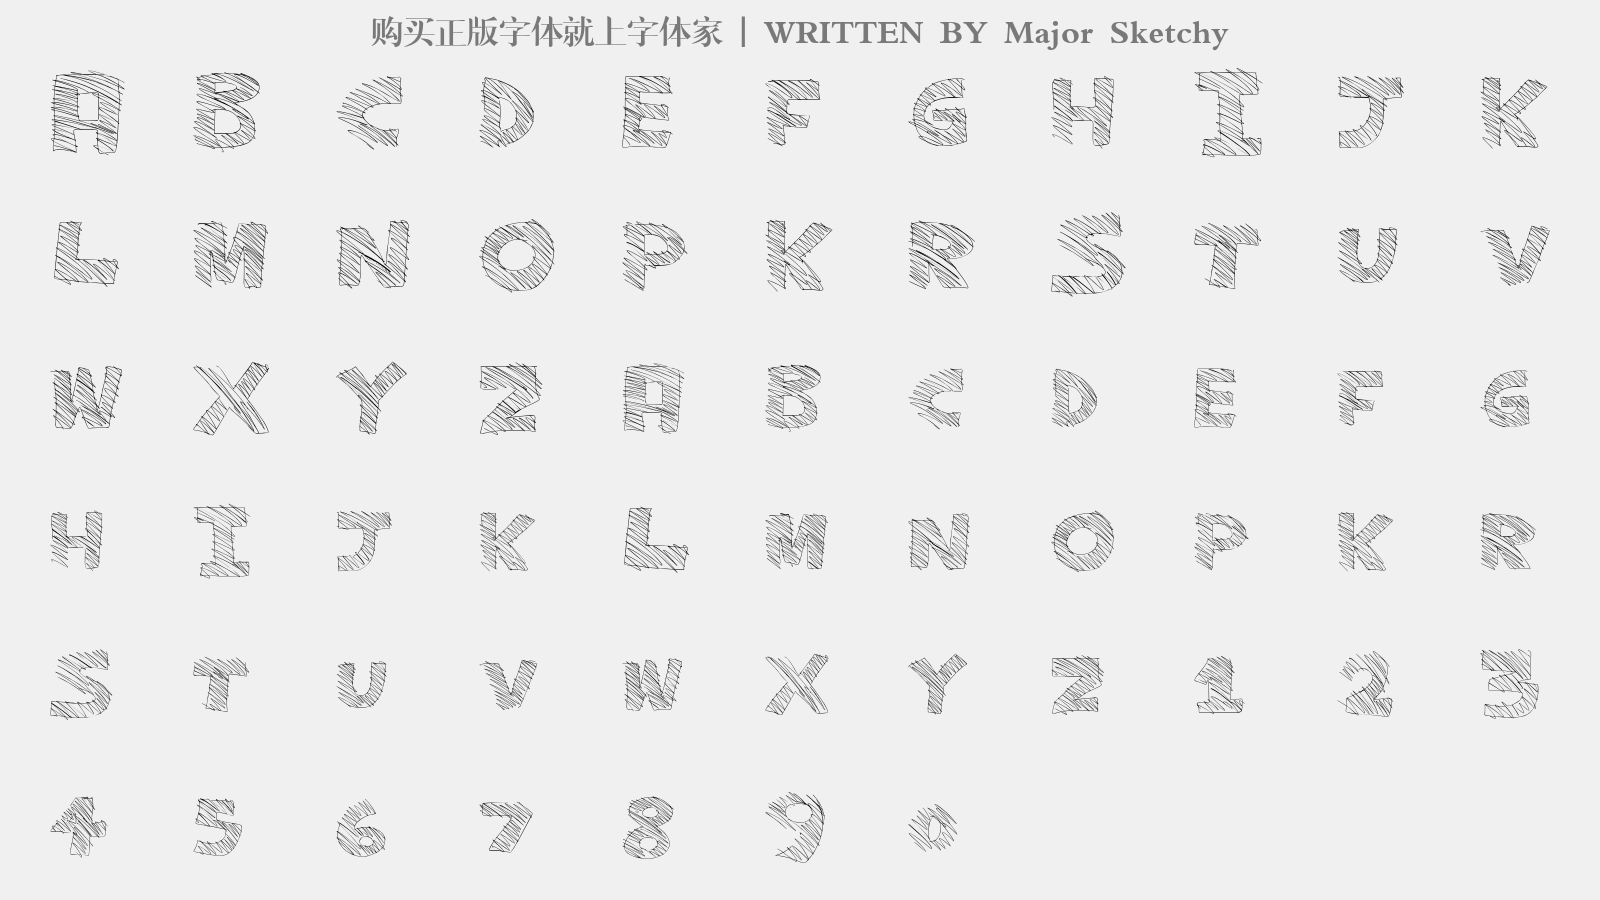 Major Sketchy - 大写字母/小写字母/数字